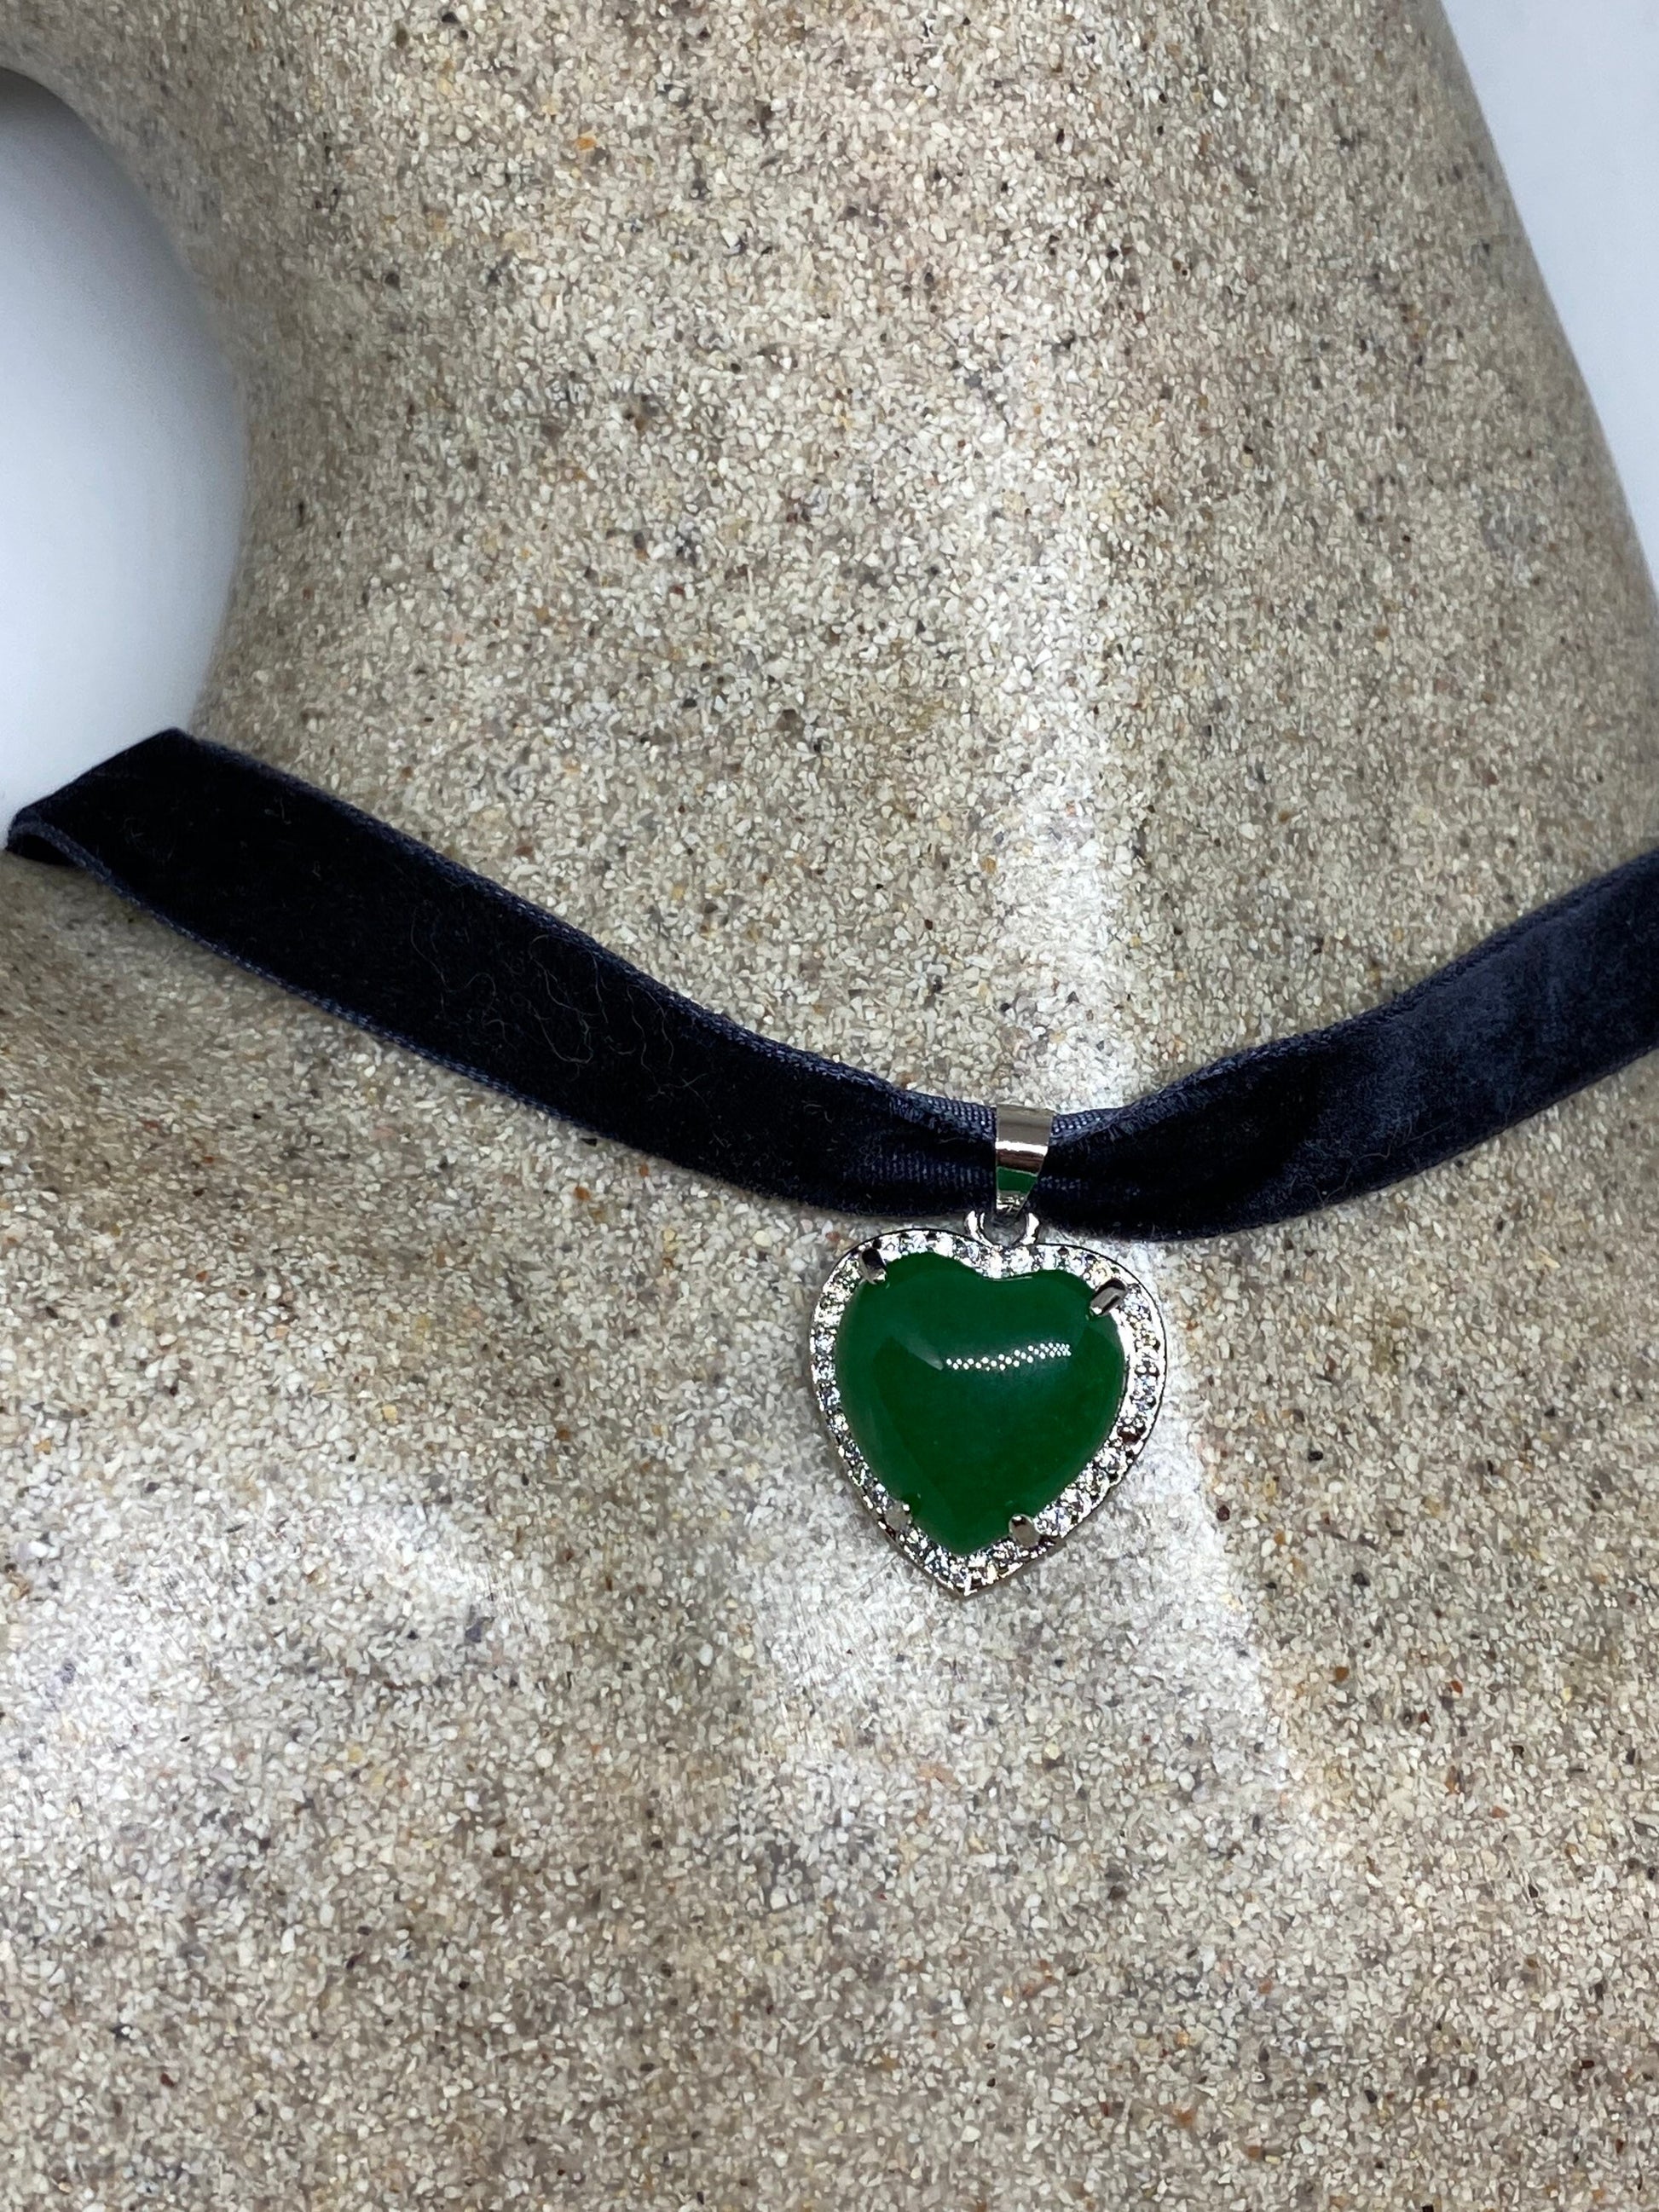 Vintage Green Jade Heart Choker Silver Finish Necklace Pendant